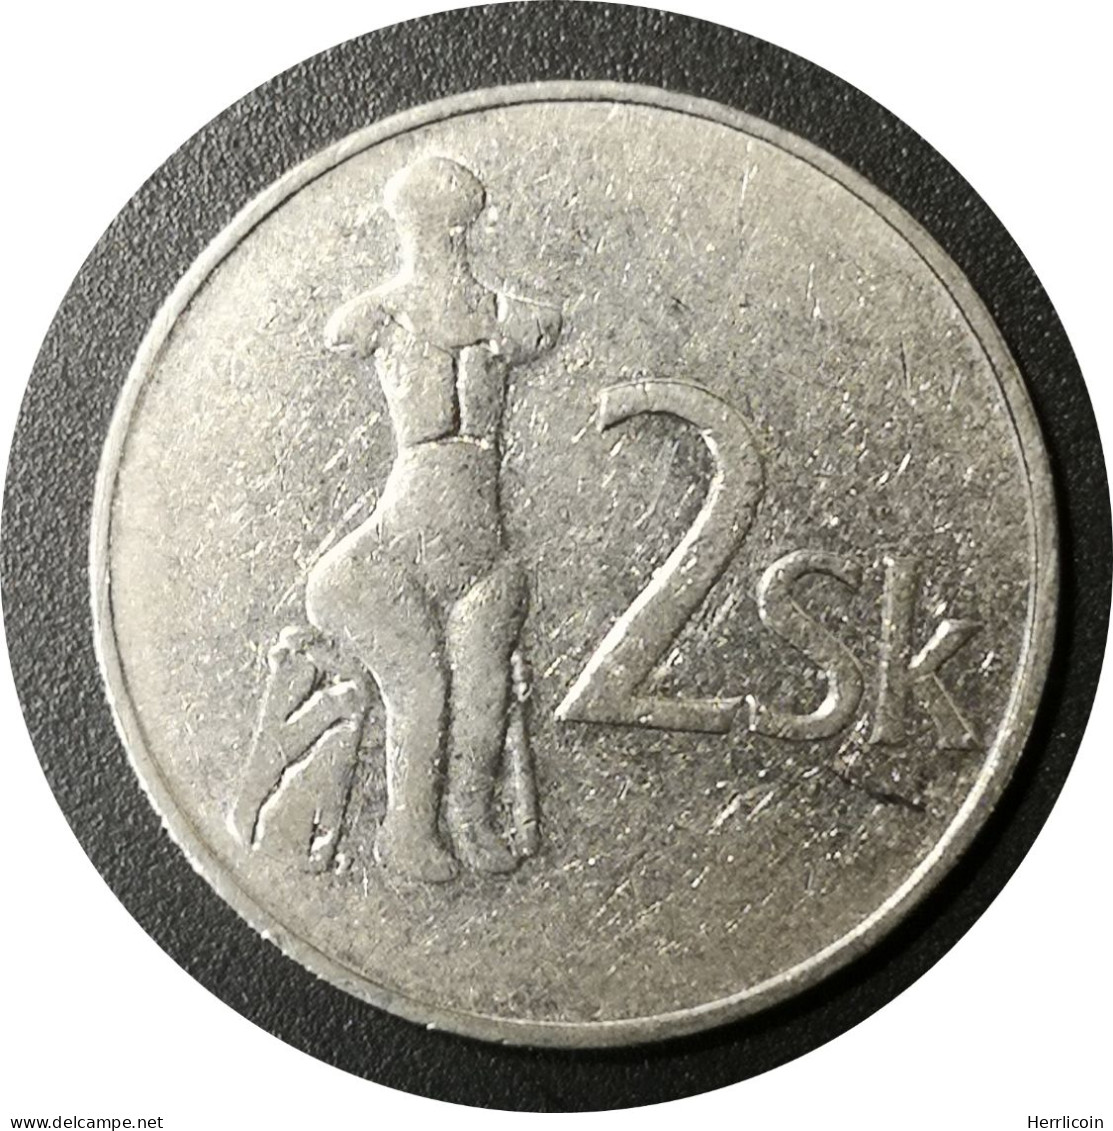 Monnaie Slovaquie - 1993 - 2 Koruny - Slowakei